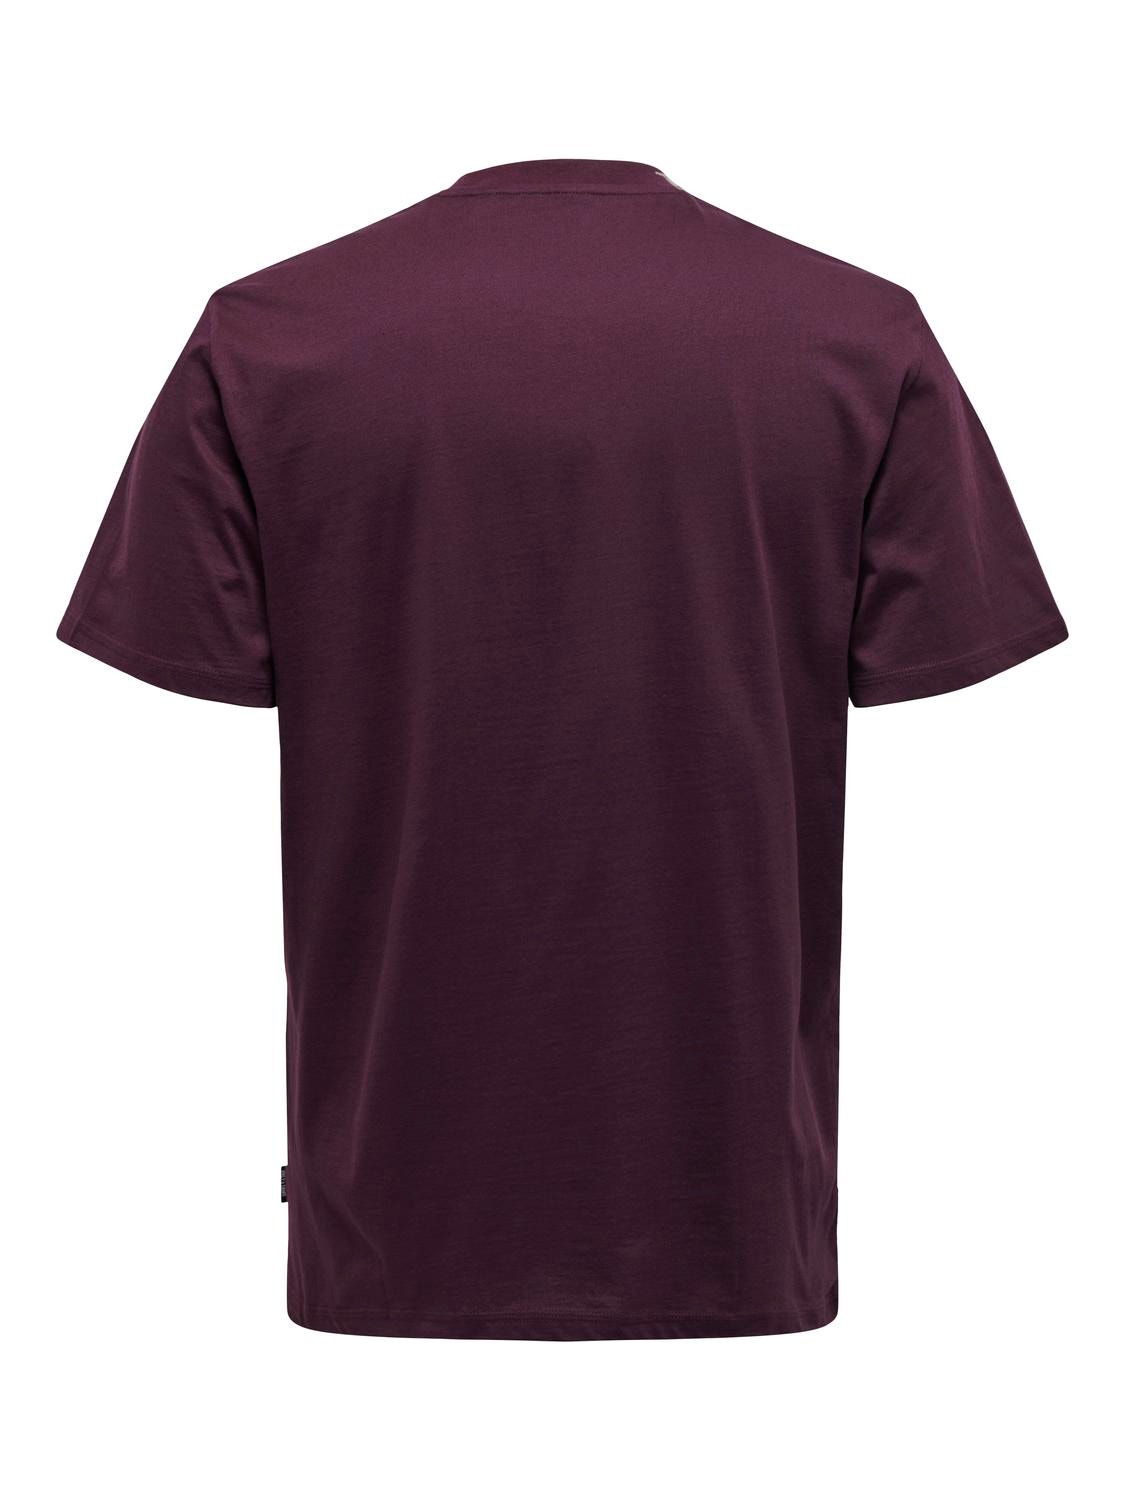 ONLY & SONS Camisetas Corte regular Cuello redondo -Winetasting - 22027521